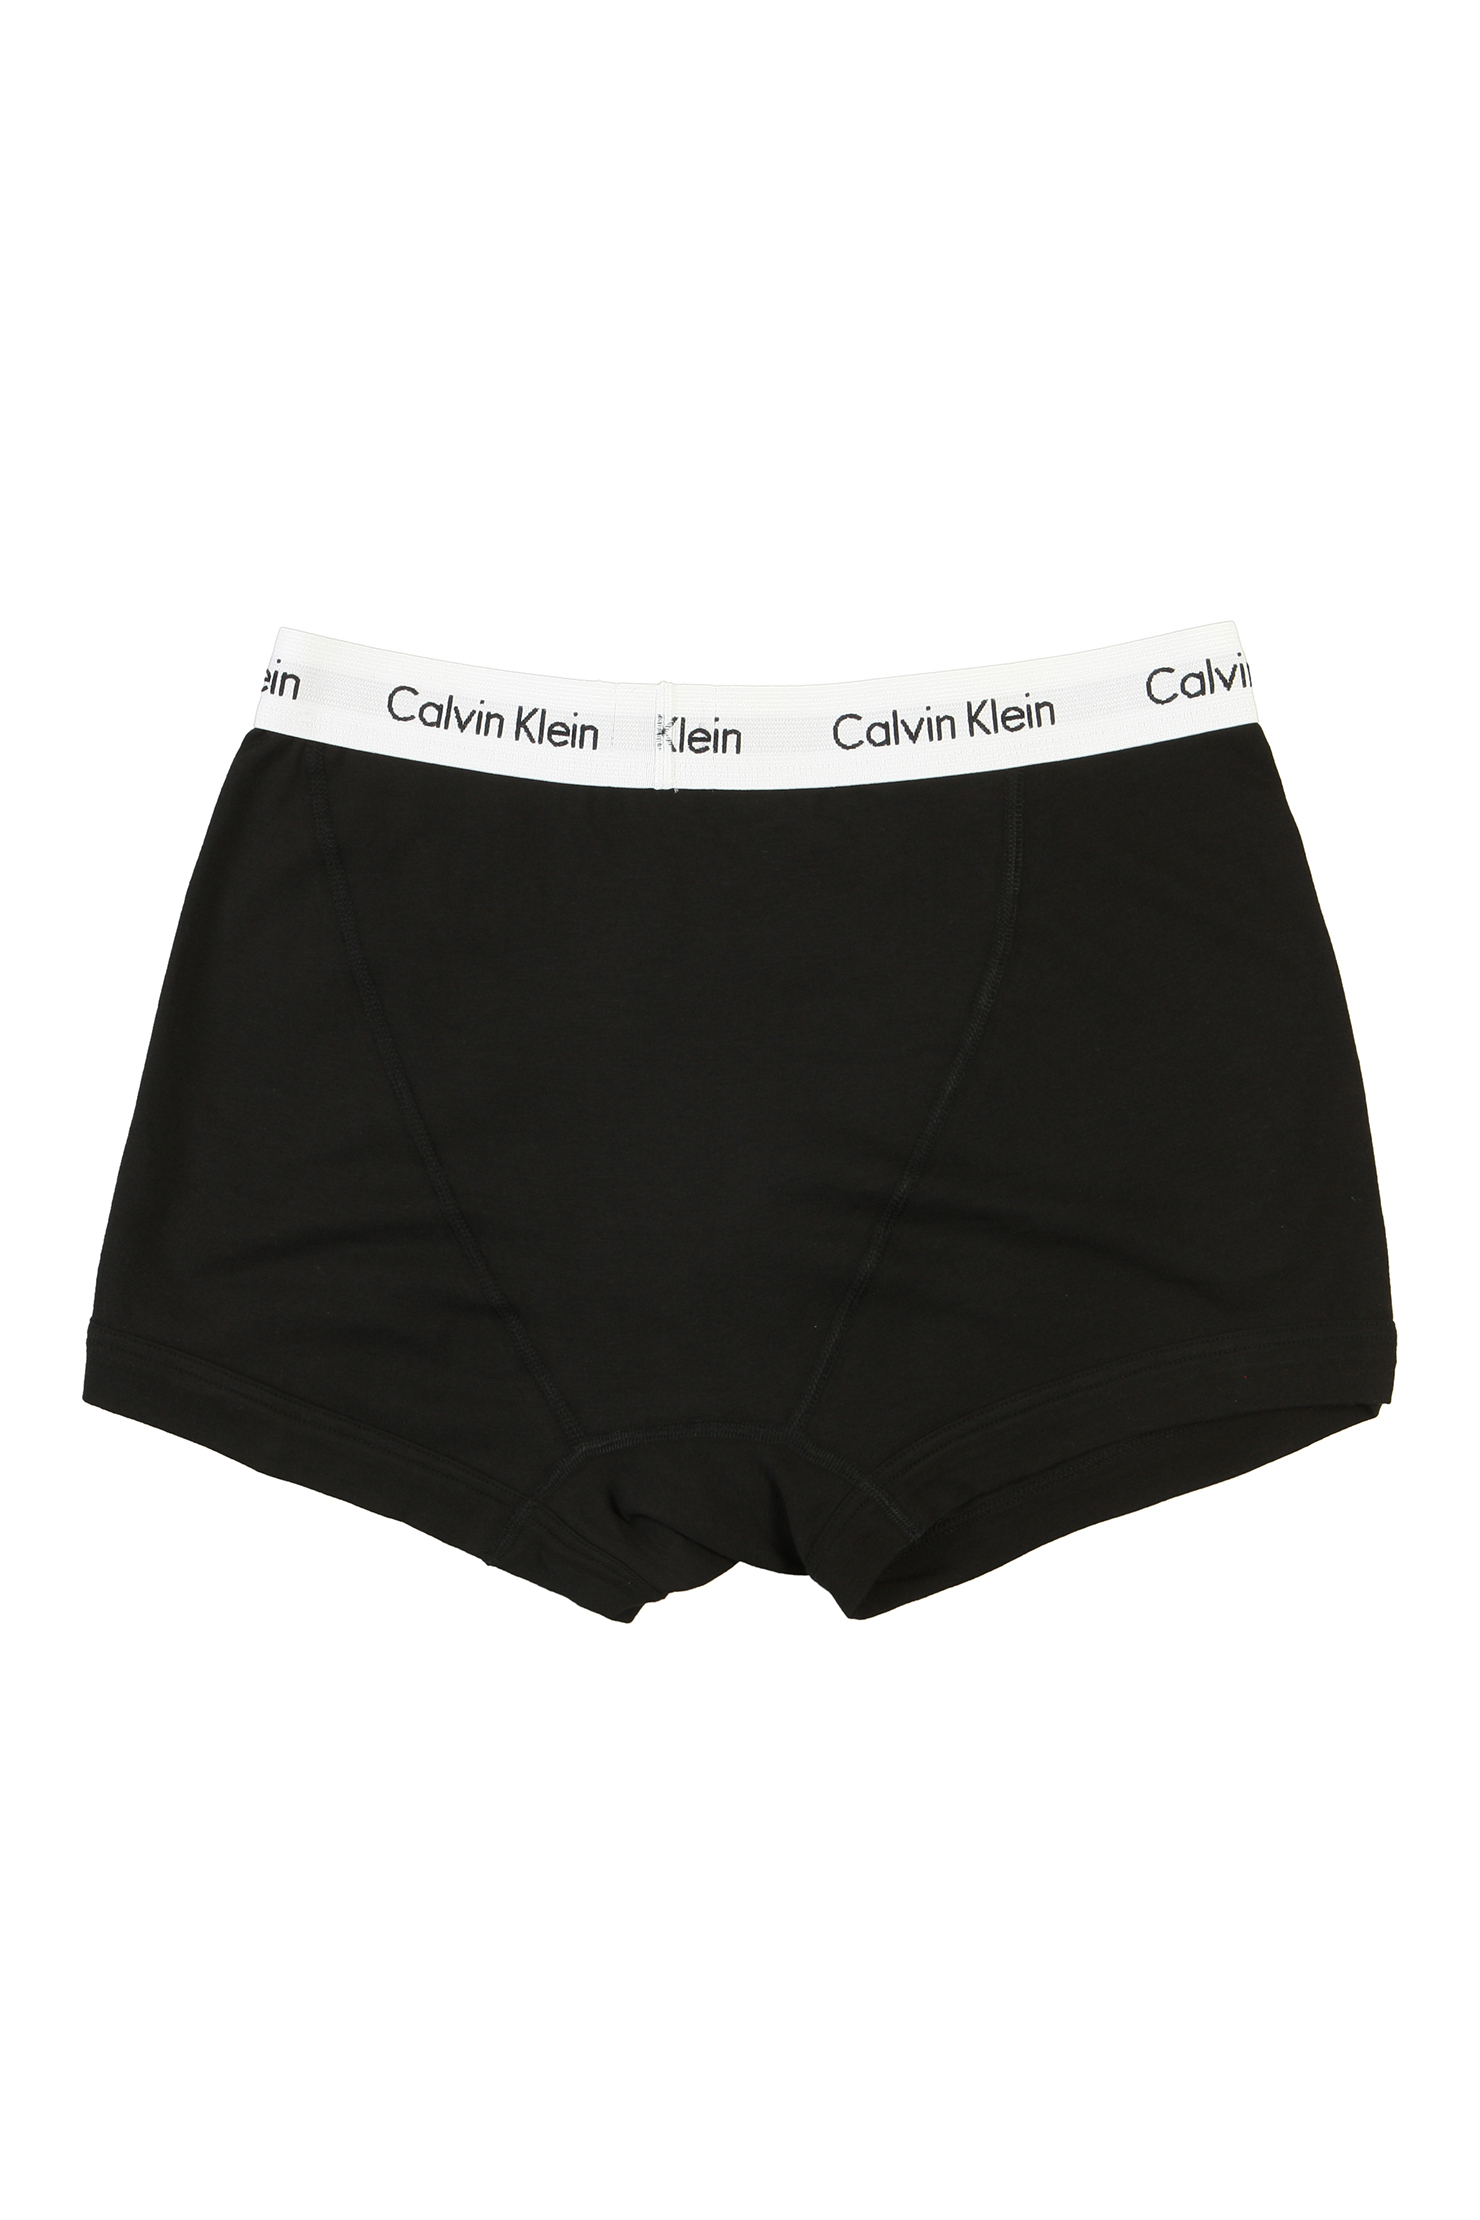 Calvin klein Trunks in Black for Men - Save 41% | Lyst